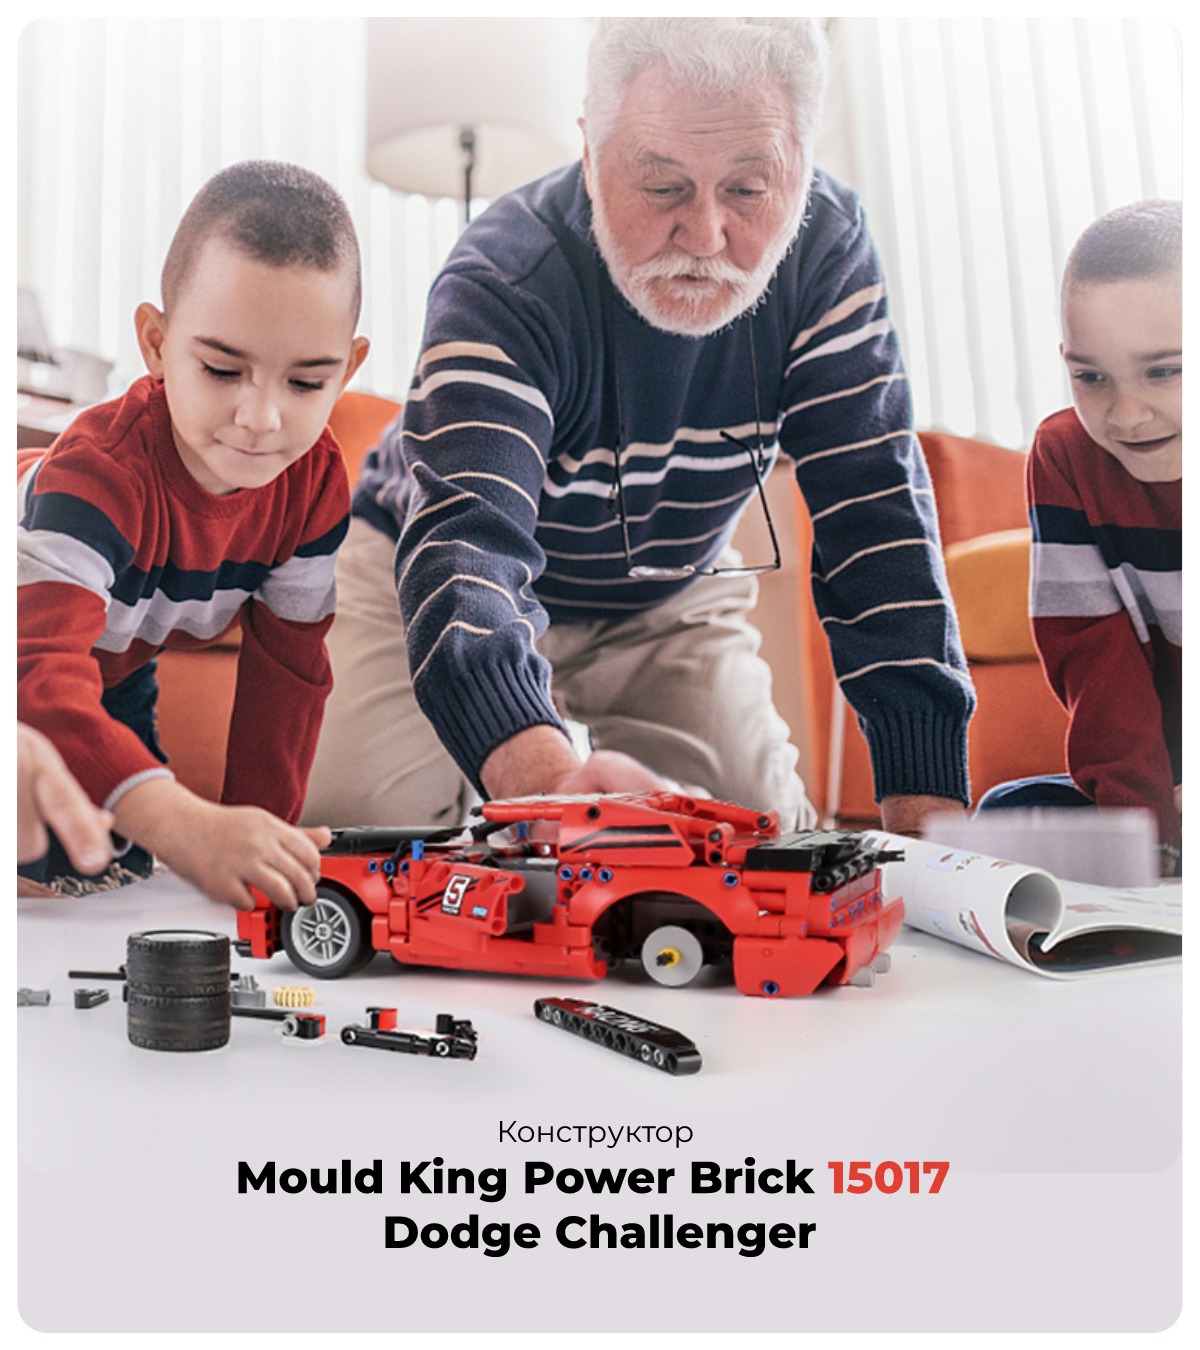 Mould-King-Power-Brick-15017-01